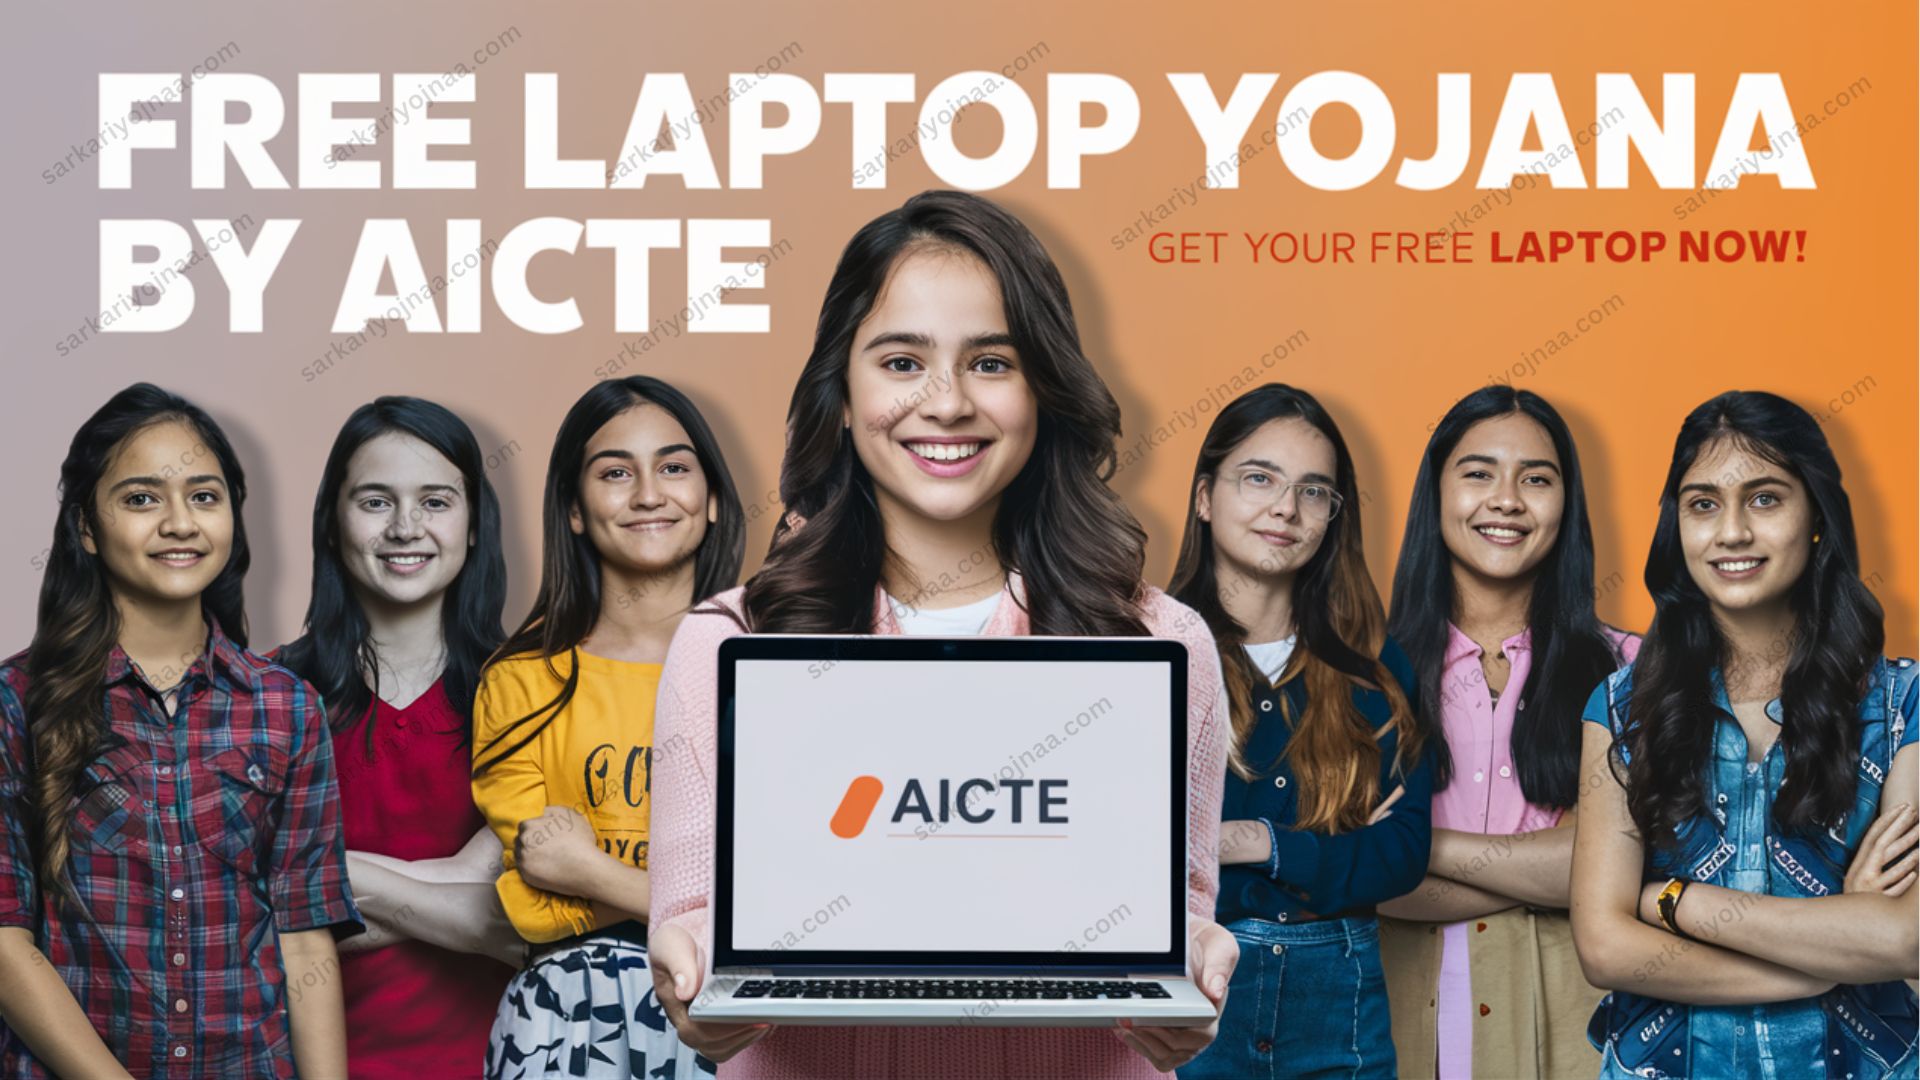 AICTE Free Laptop Yojana 2024